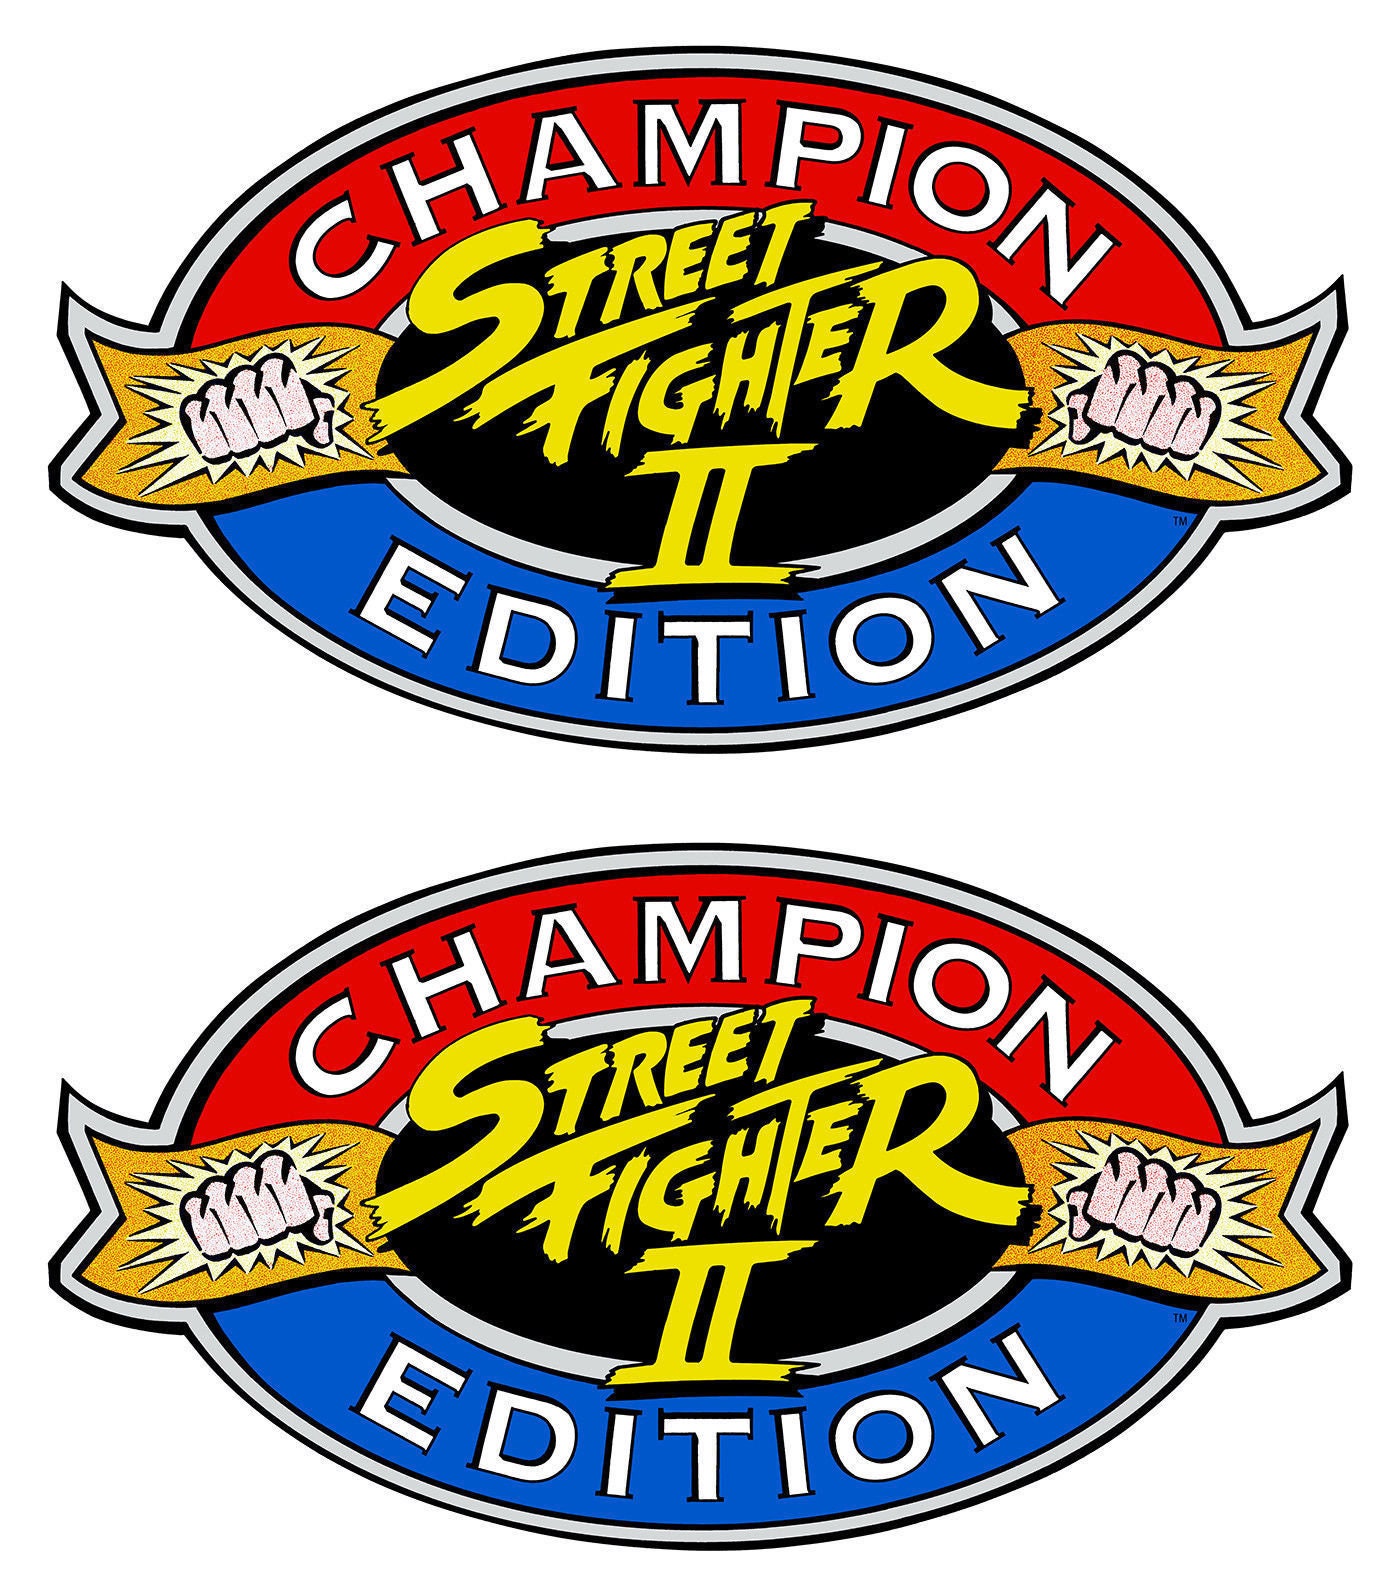 CSDb] - Street Fighter 2 Champion Edition Demo by Herrera64 (2022)